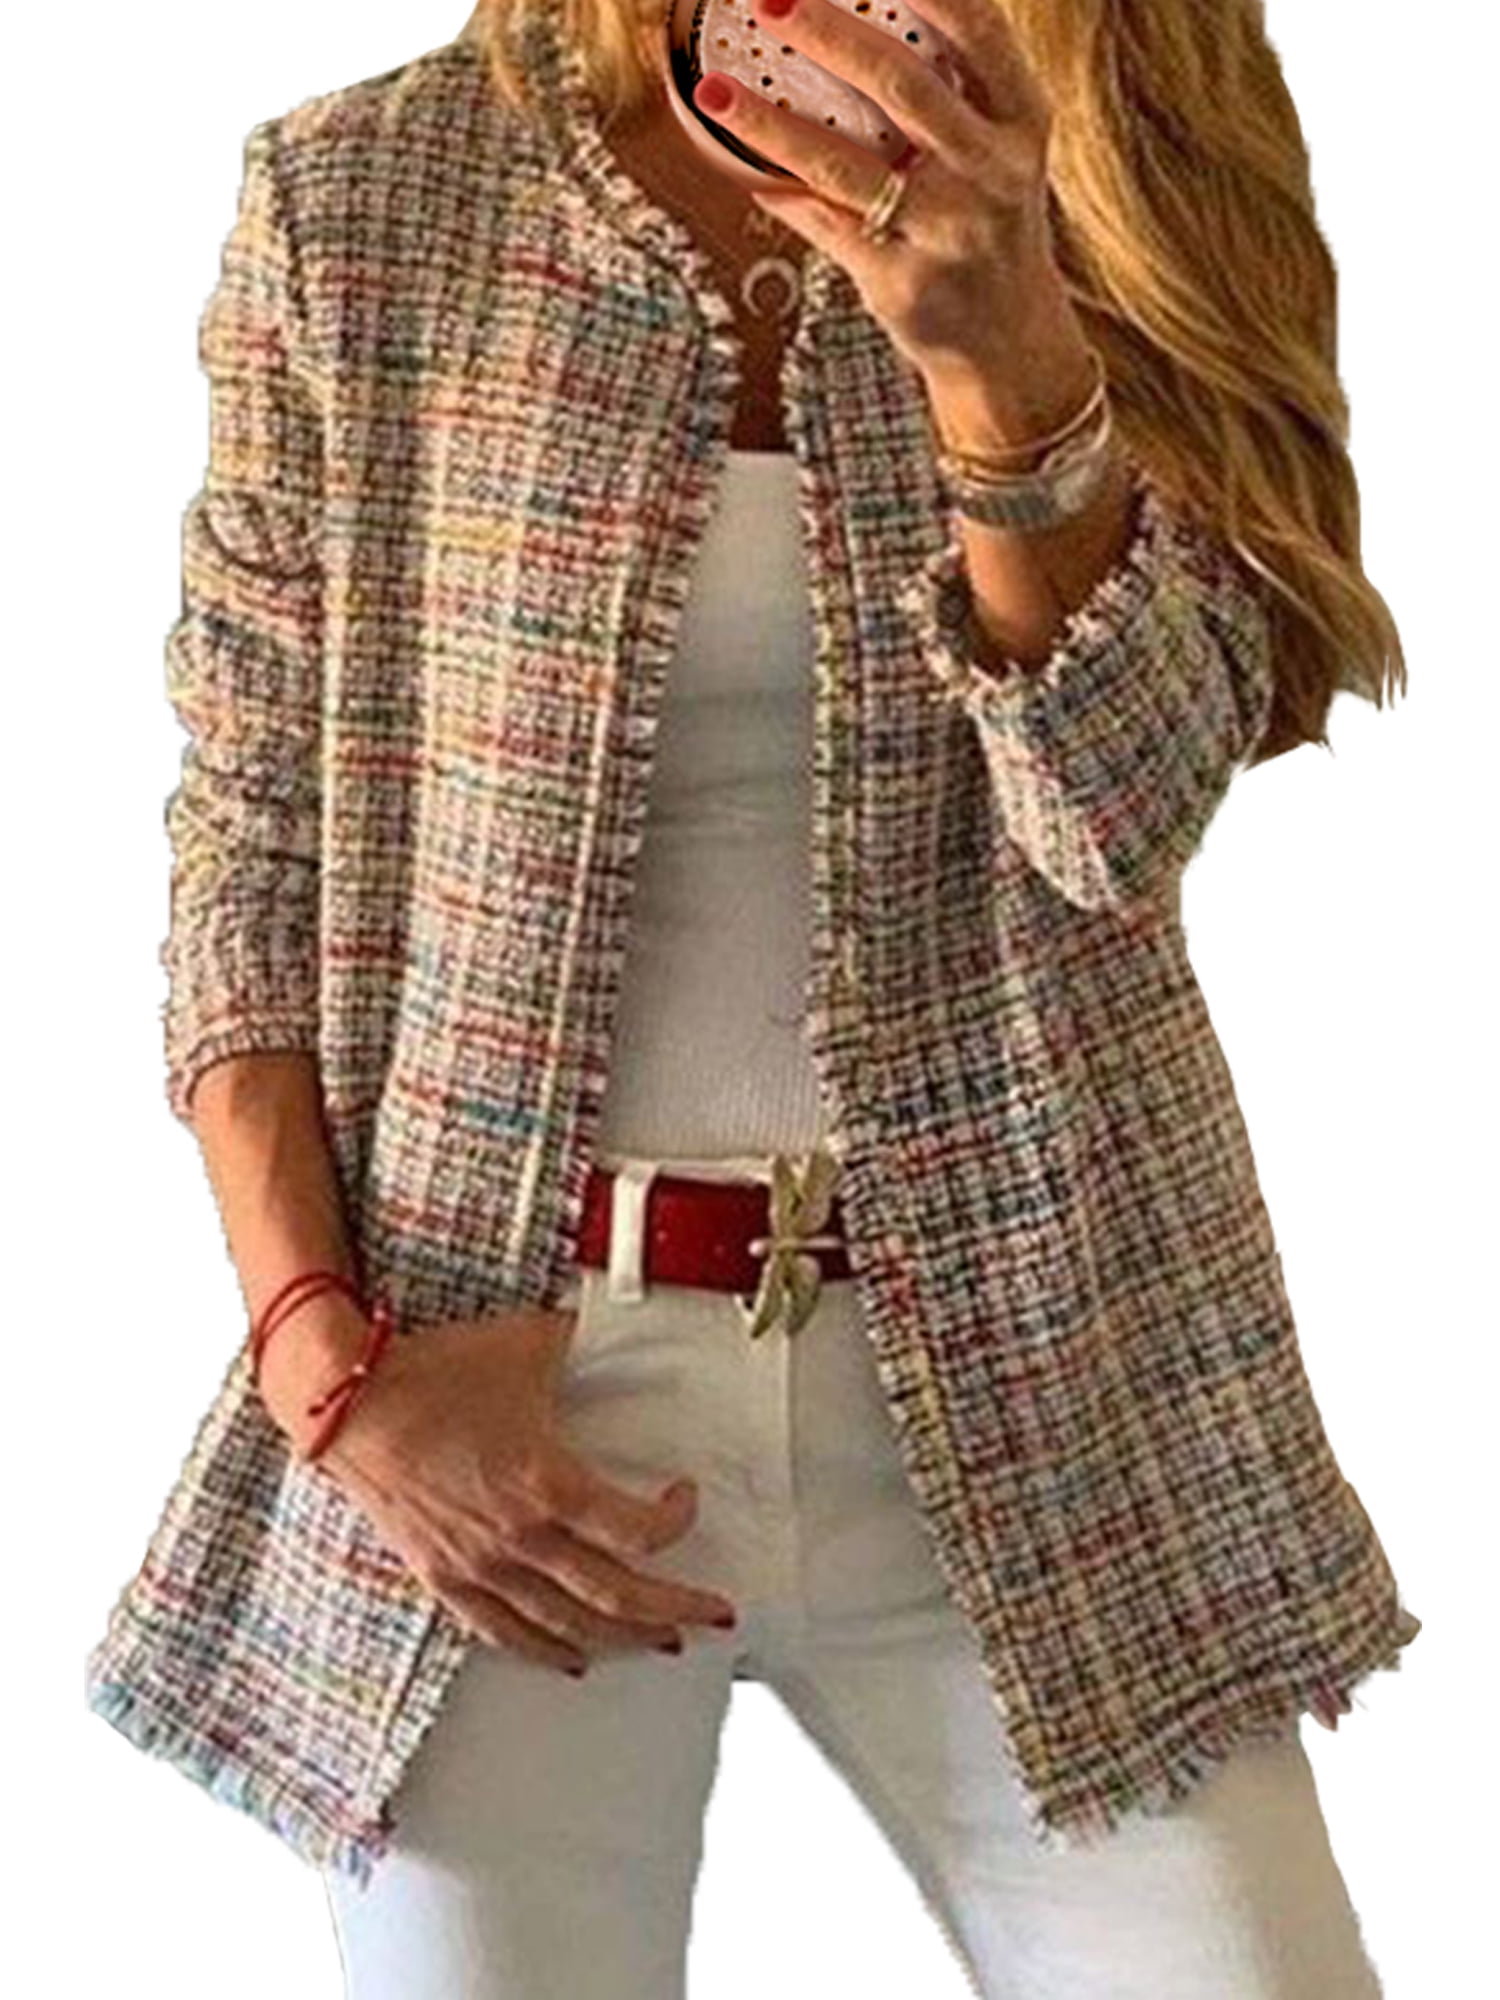 2017 CHIC women's Tweed Frayed Jacket long Blazer coat S M L Blogger new hot 